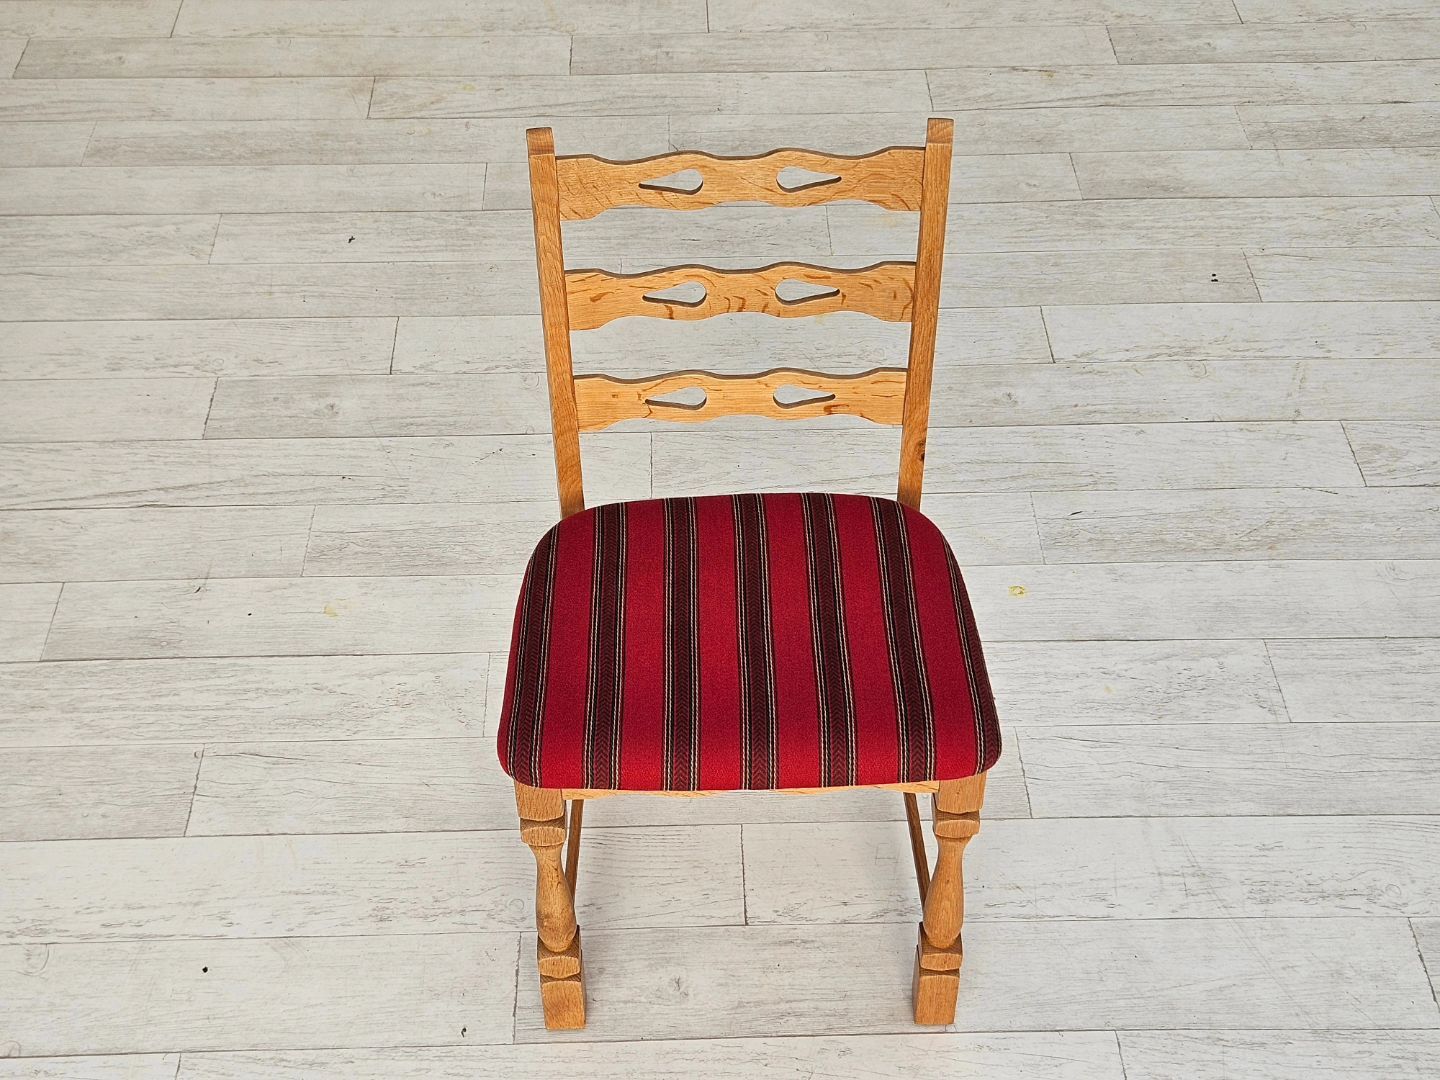 1970s, set 6 pcs of Danish dinning chairs, original good condition, furniture wool.